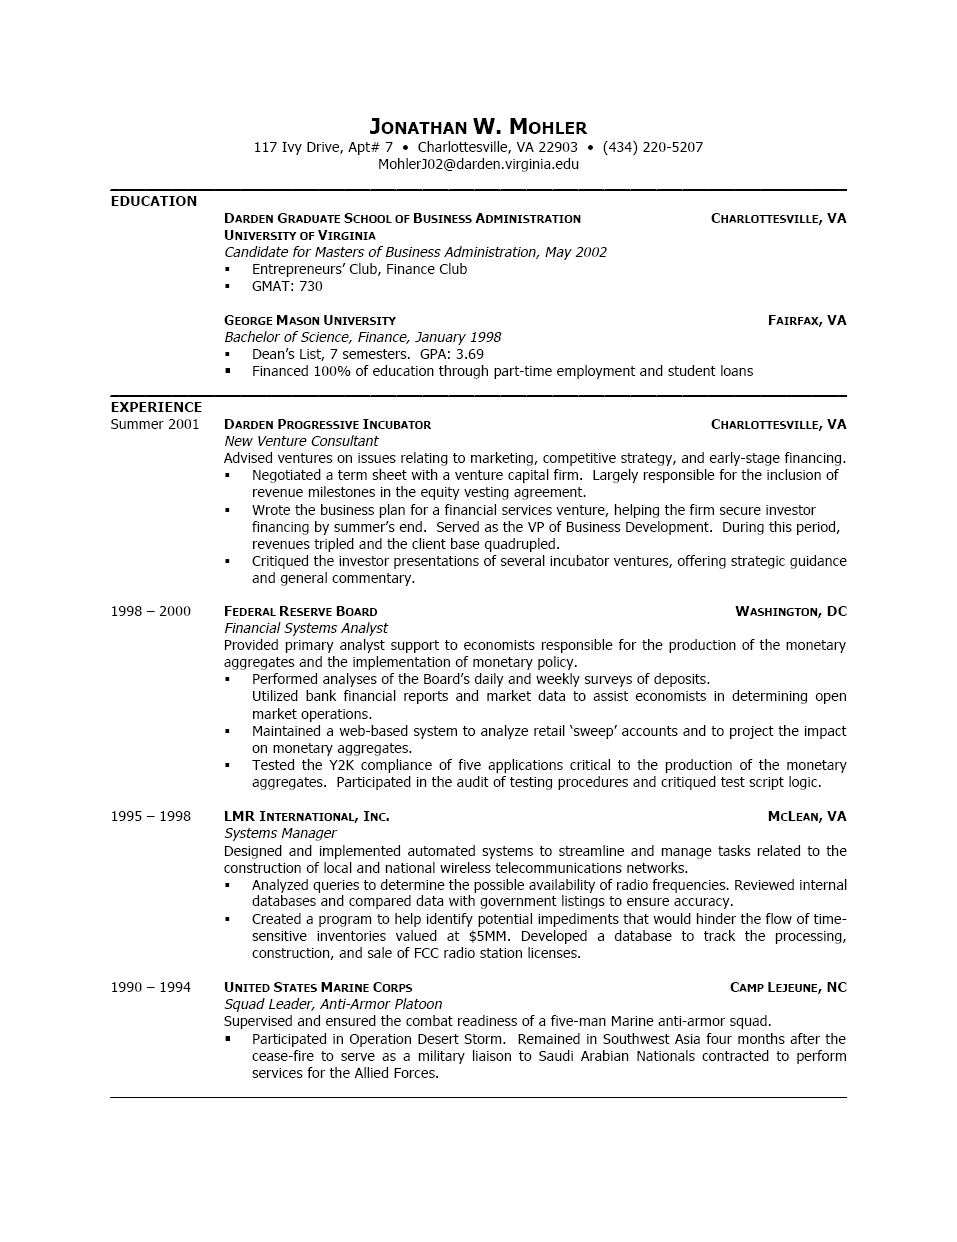 Resume Format High School 